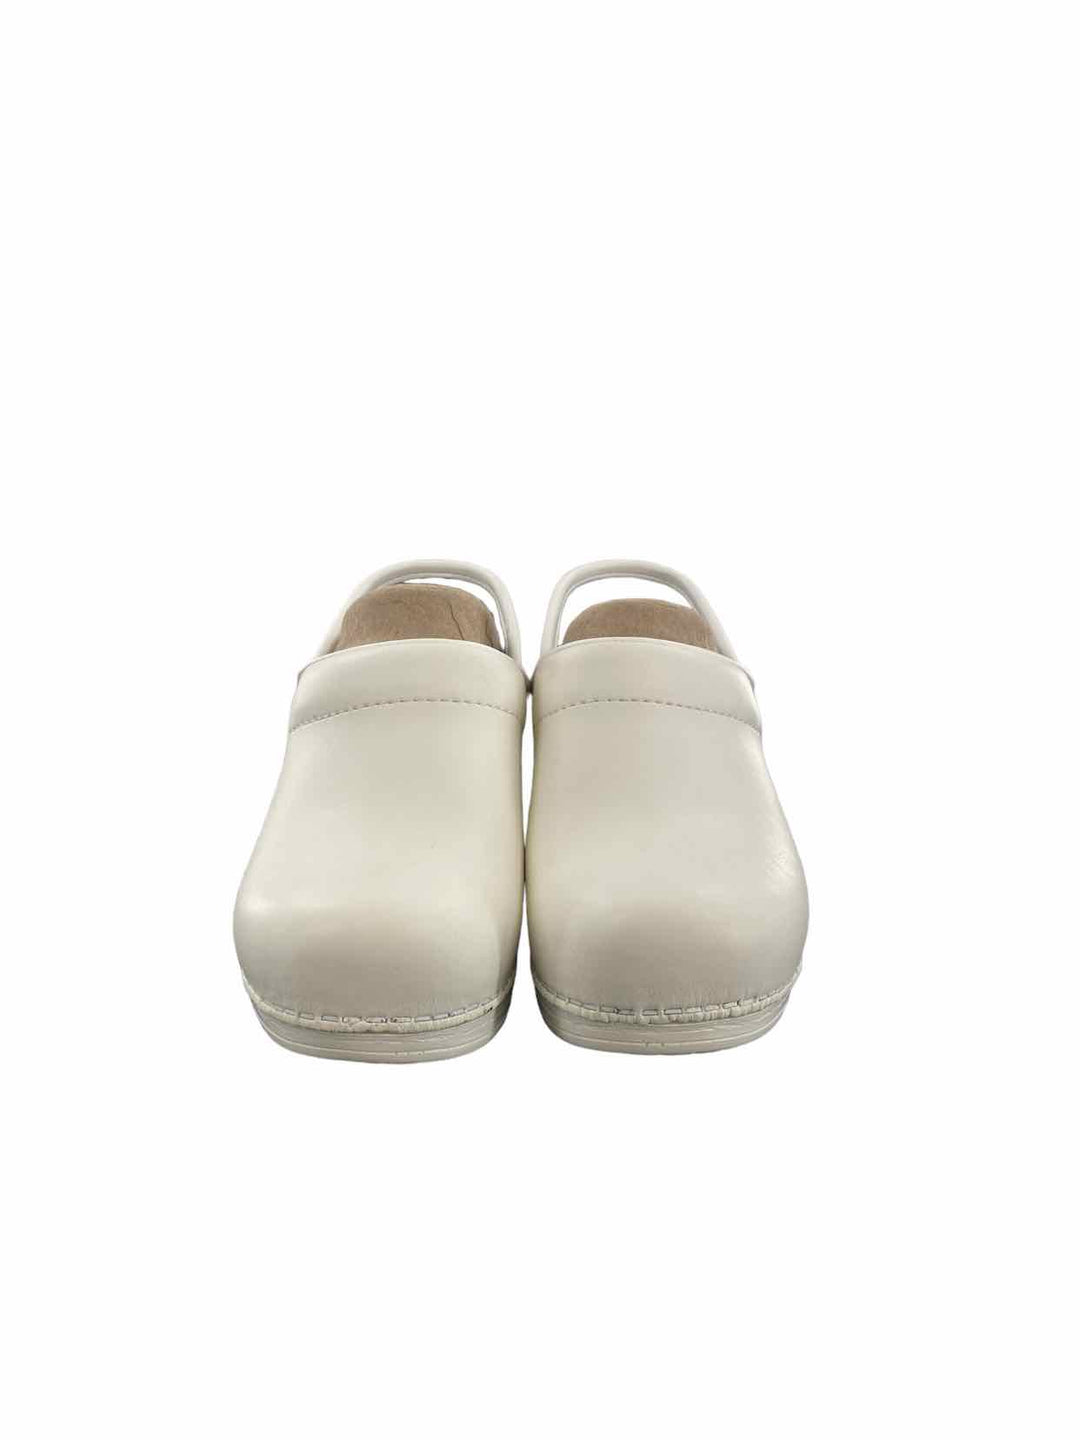 Dansko Shoe Size 36 White Leather Clogs